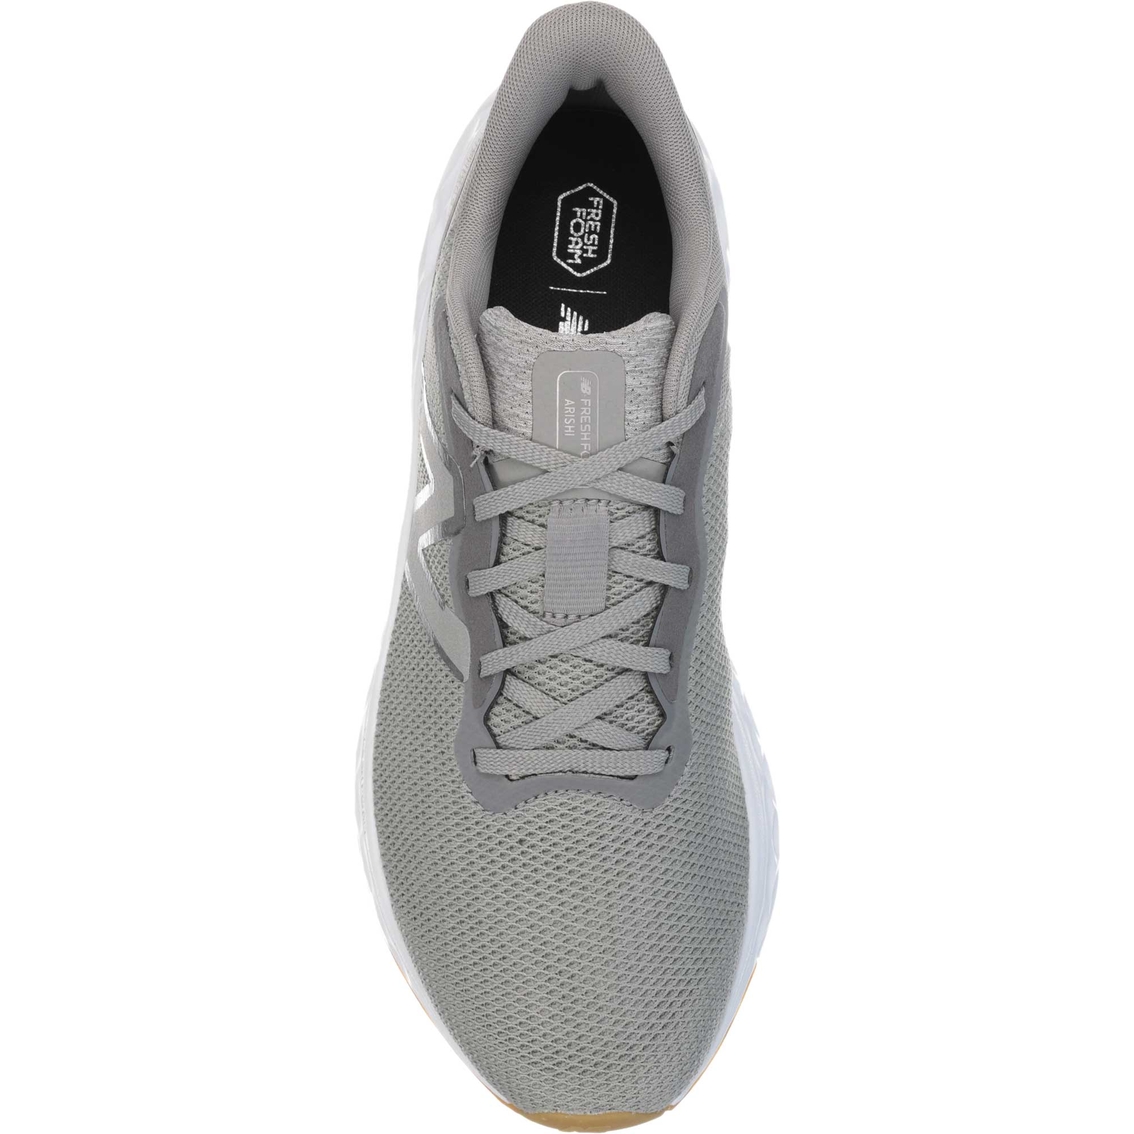 New Balance Men's Mariseg4 Running Shoes | Men's Athletic Shoes | Shoes ...